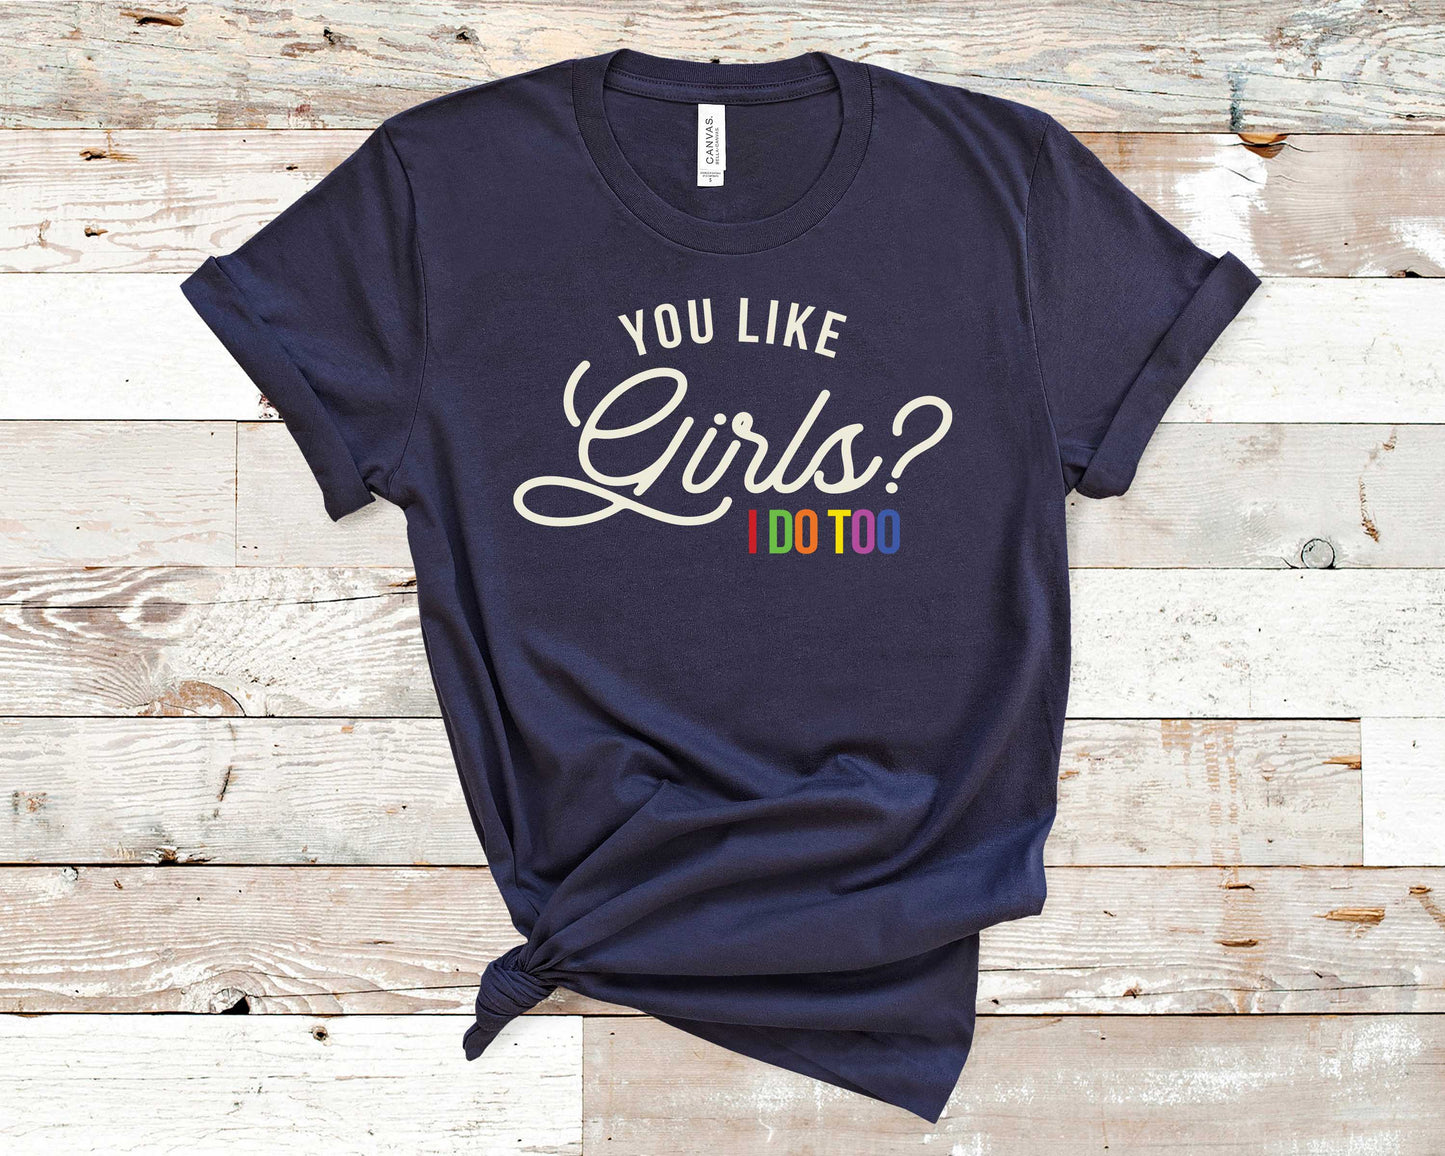 You Like Girls? I Do Too - LGBTQ